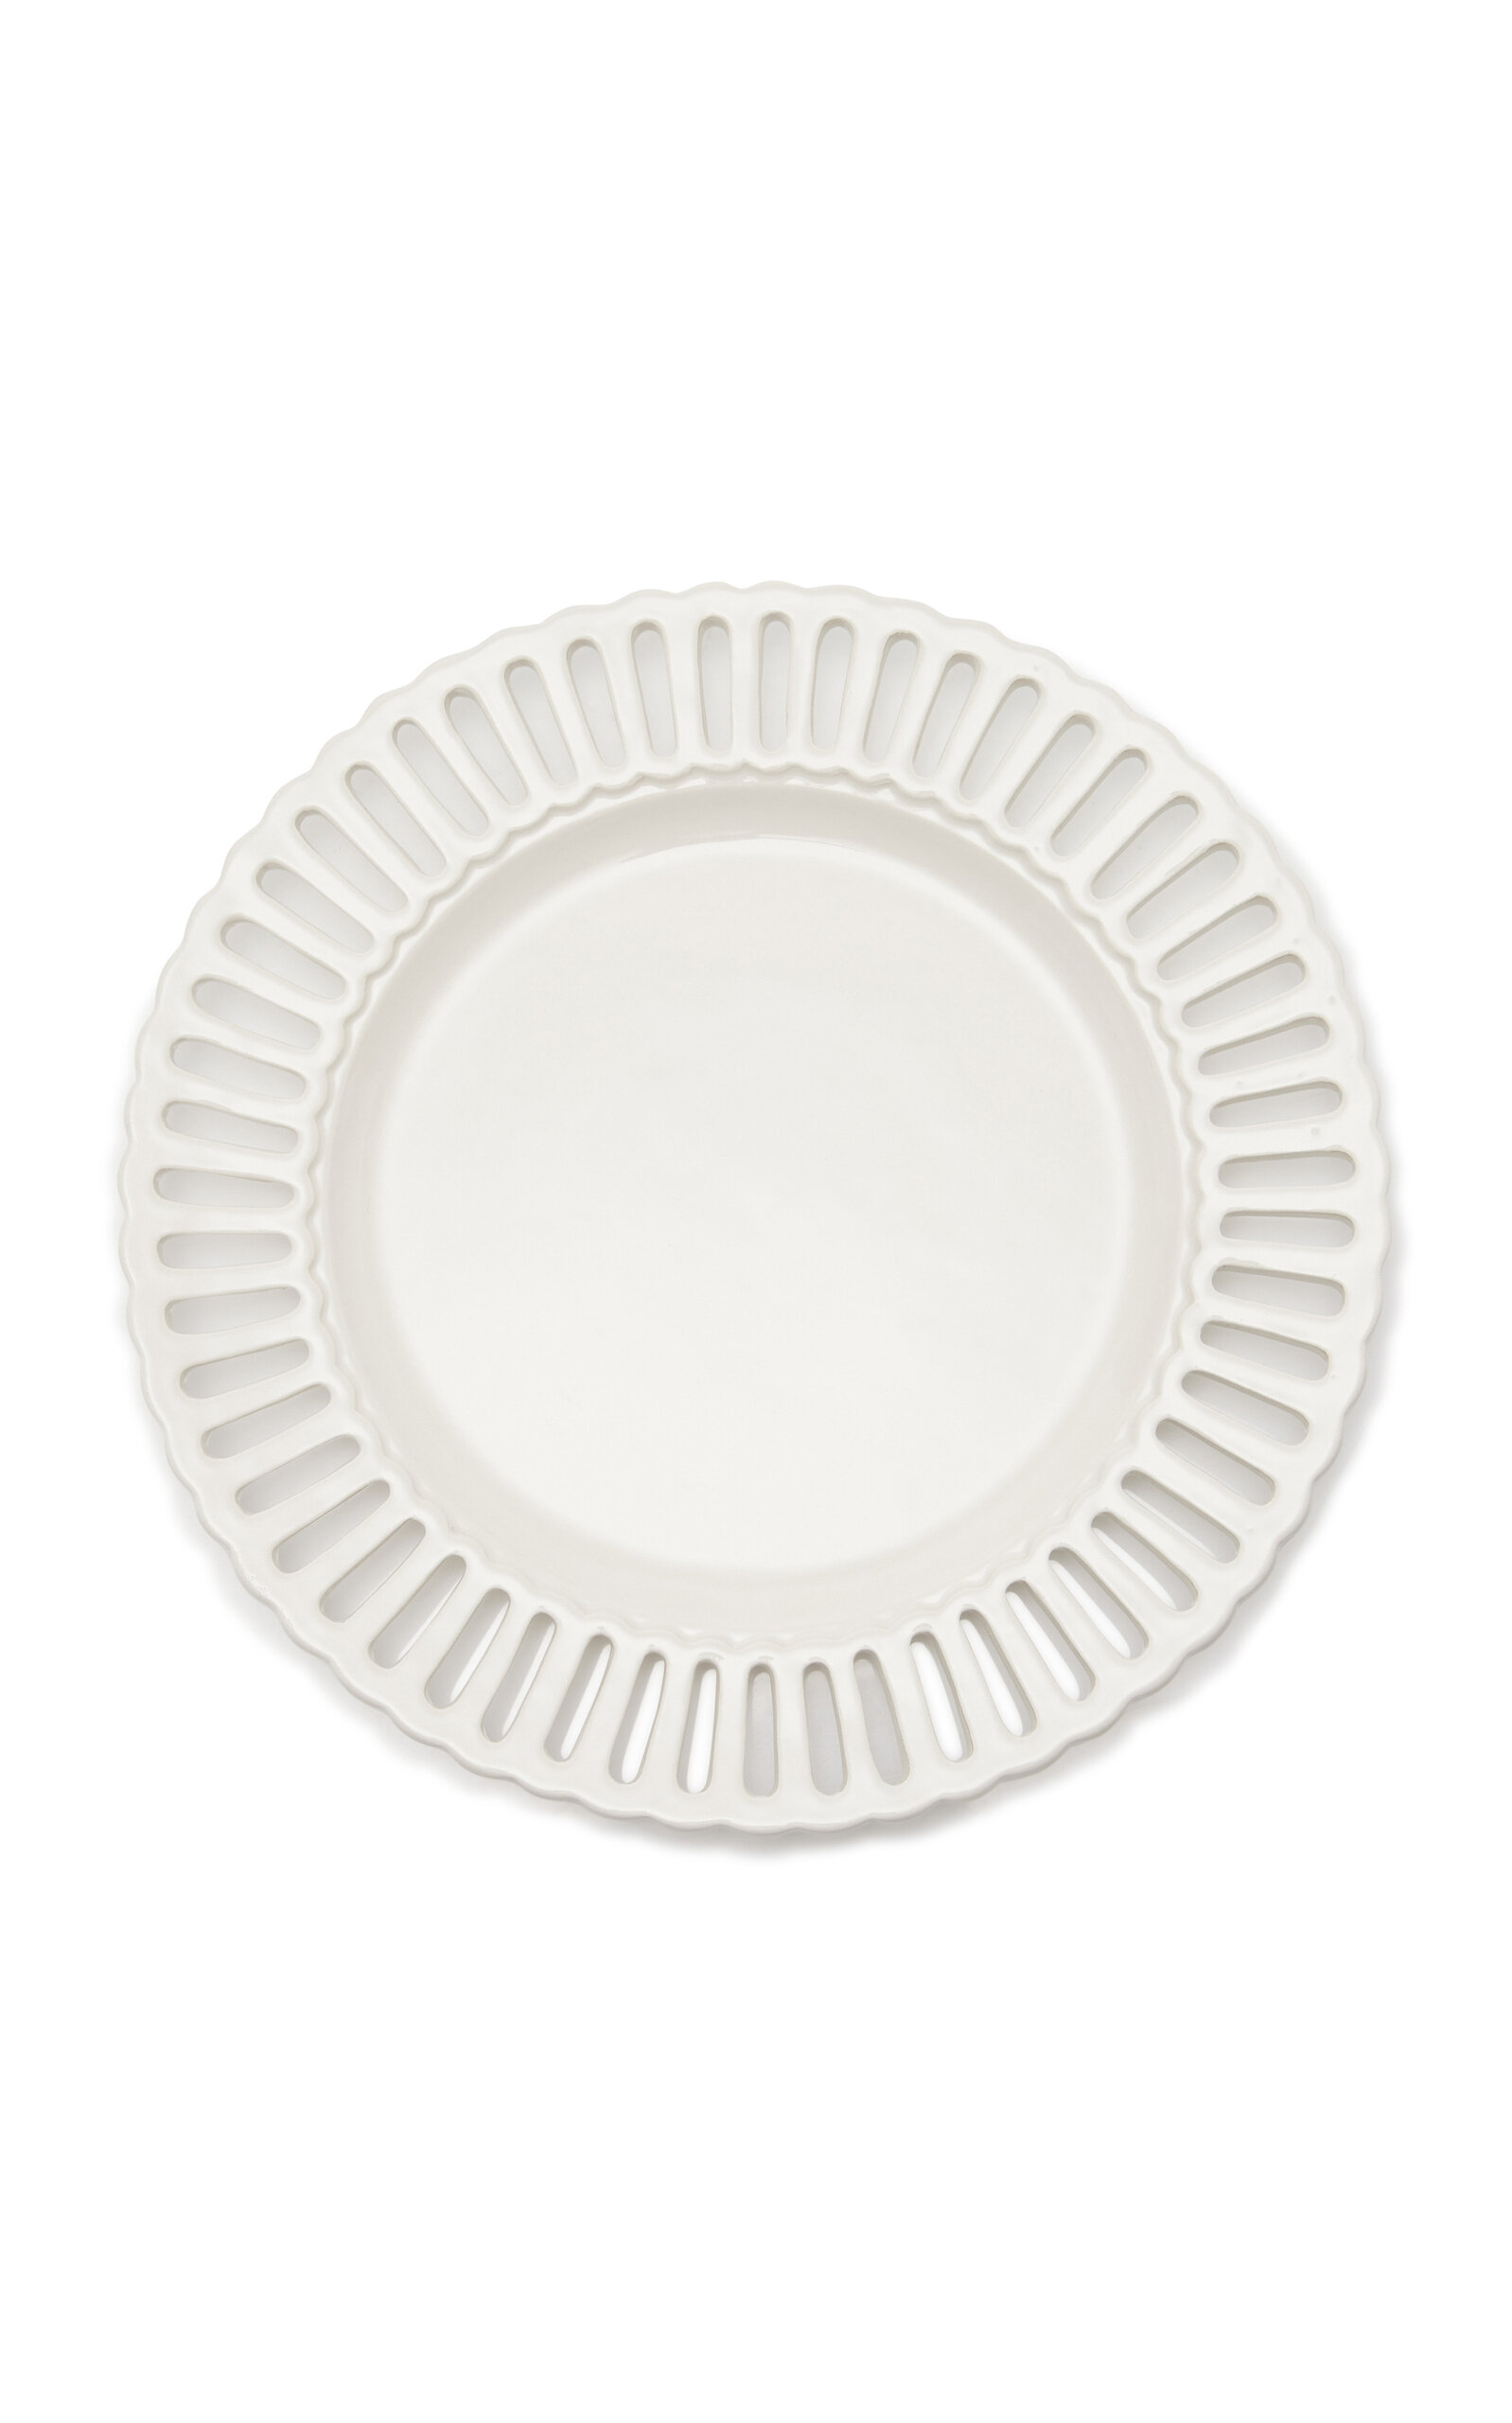 Moda Domus Balconata Creamware Charger Plate In White